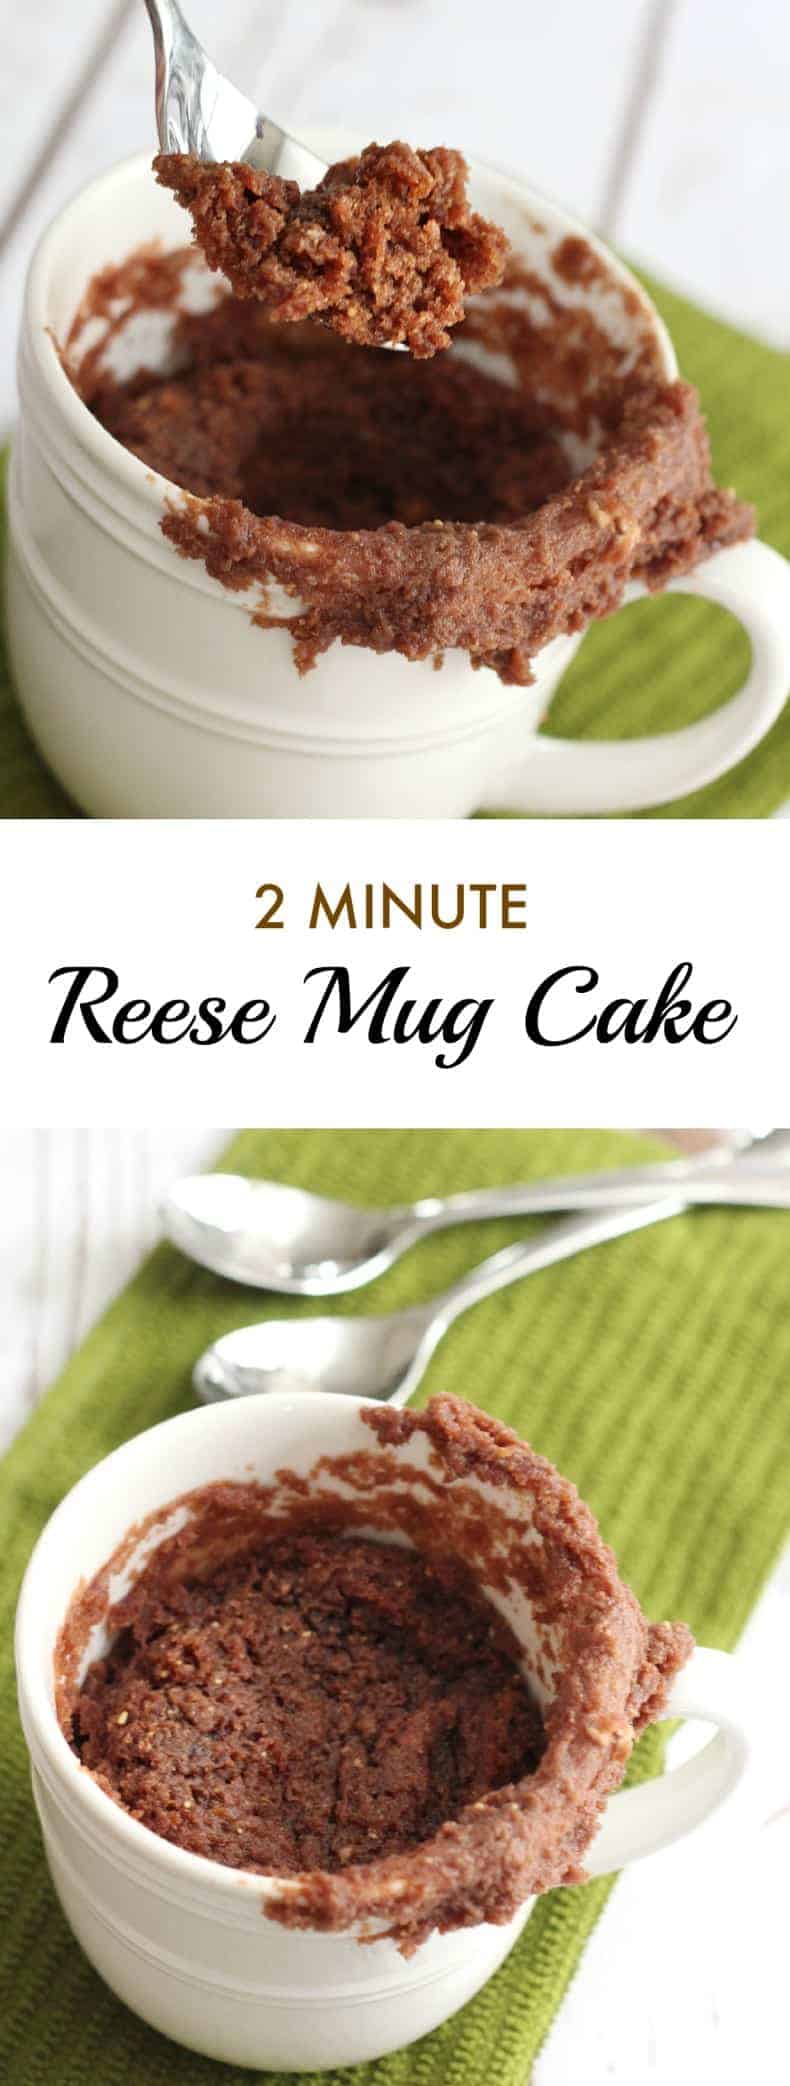 reese mug cake recipe